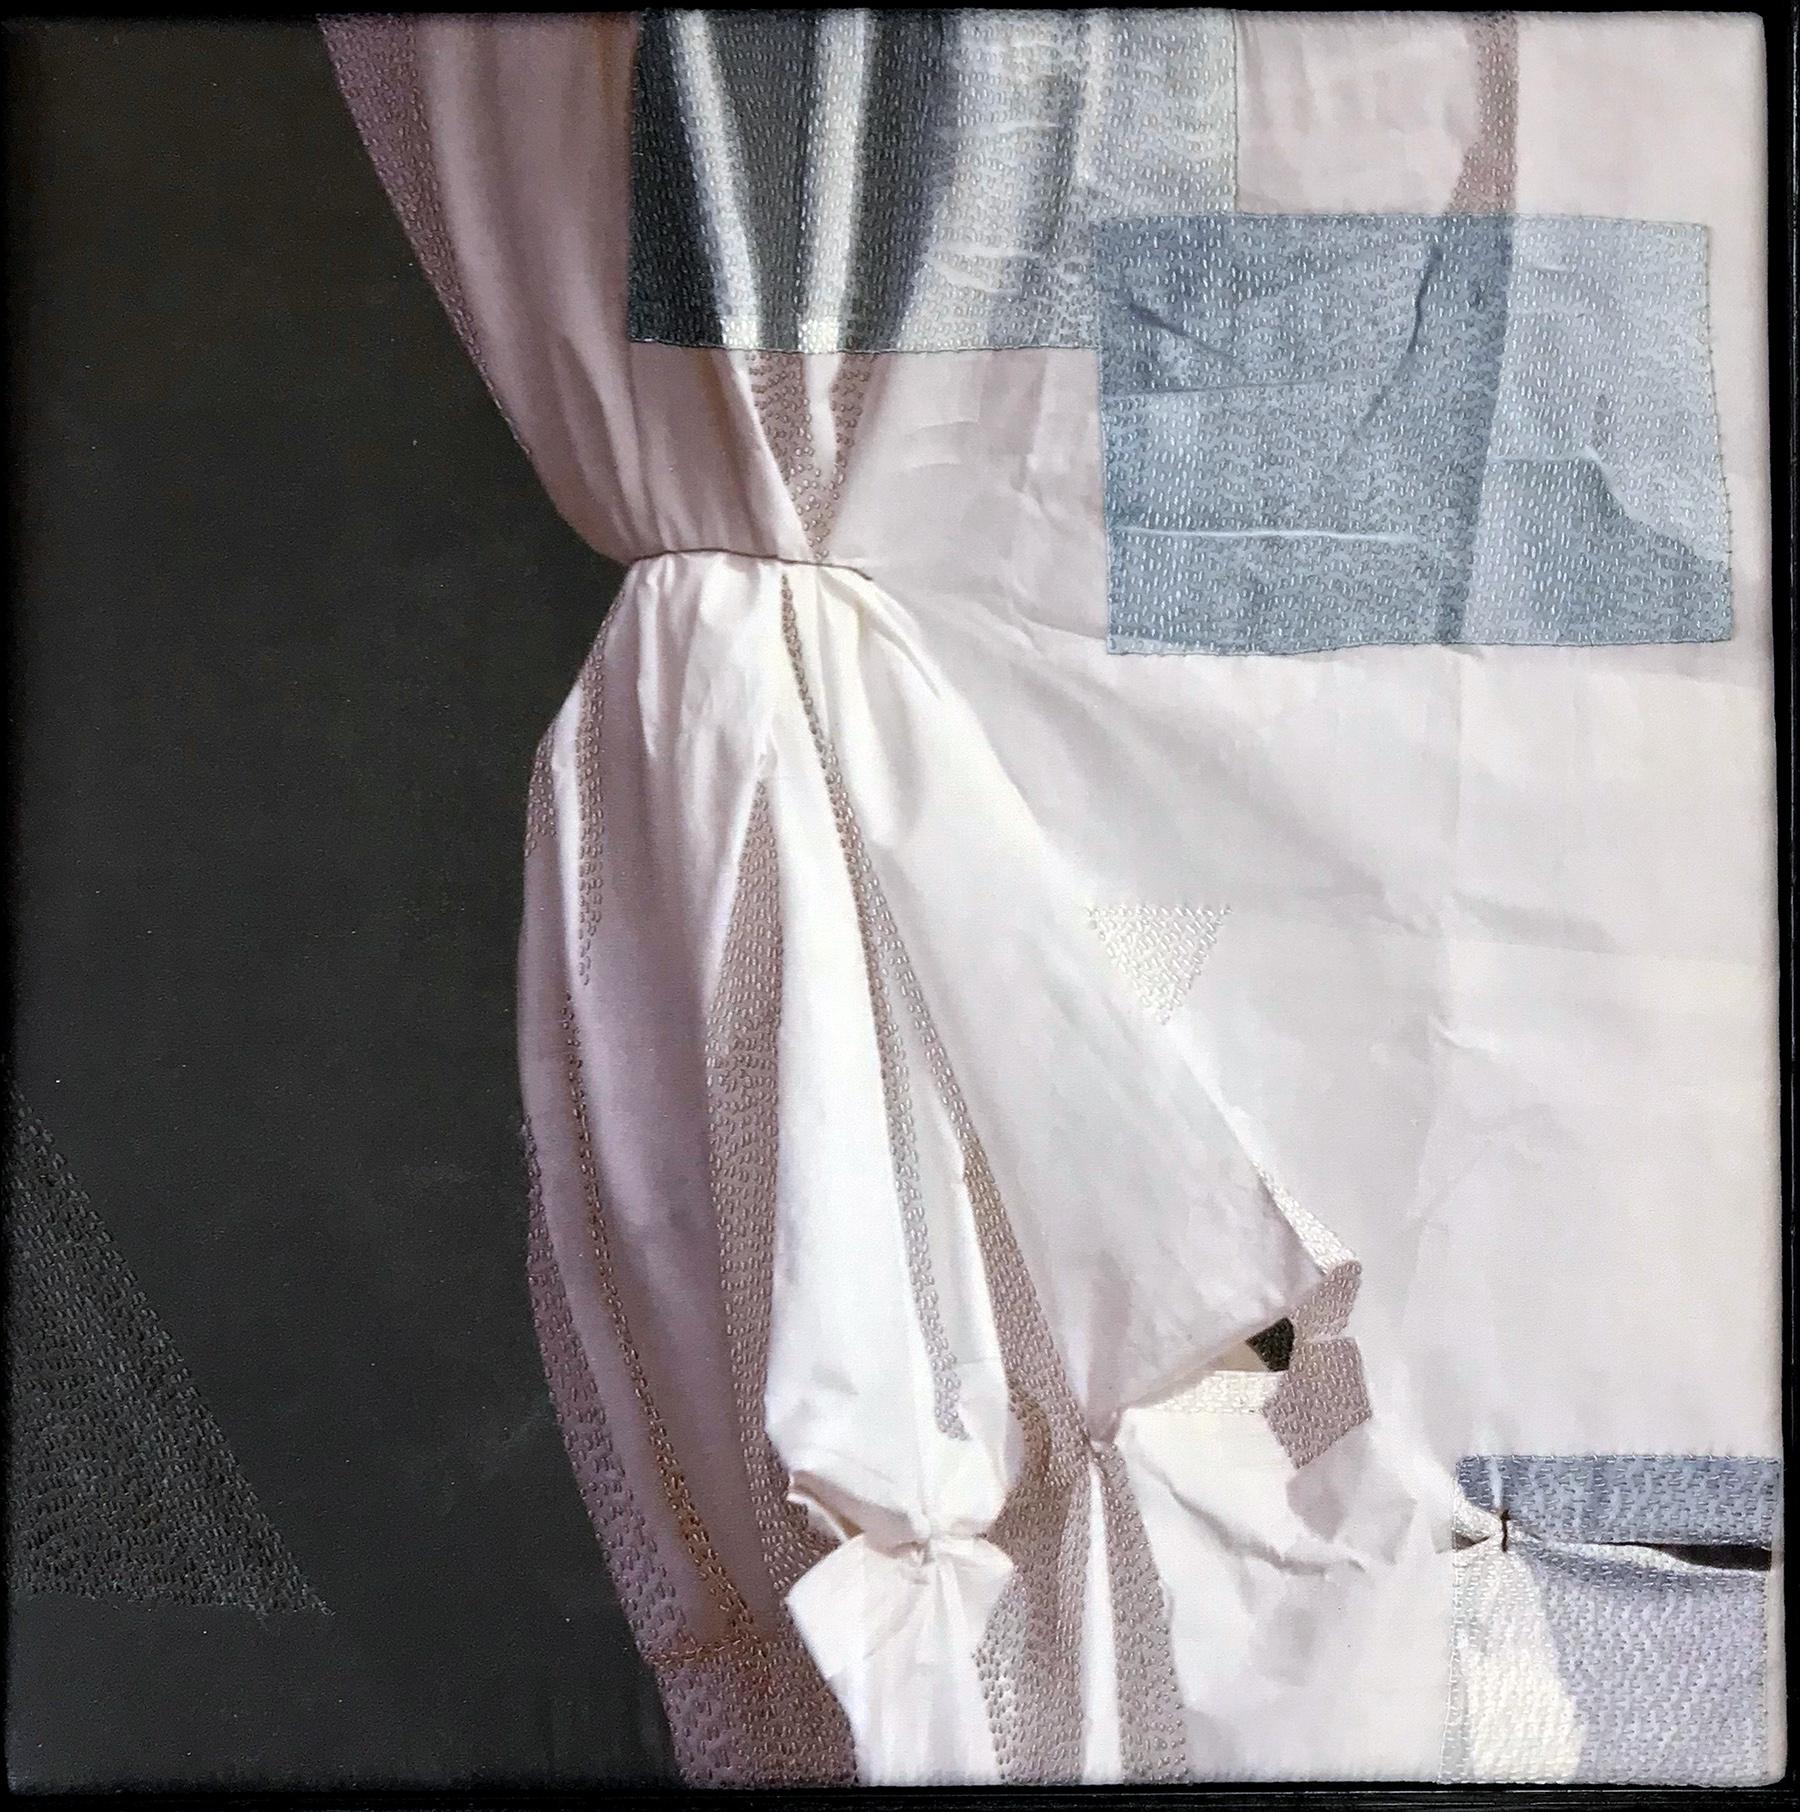 Luanne Rimel Abstract Sculpture – "Curtain Call / St. Louis", Originalfotografie, gedruckt auf Seide, handgenäht